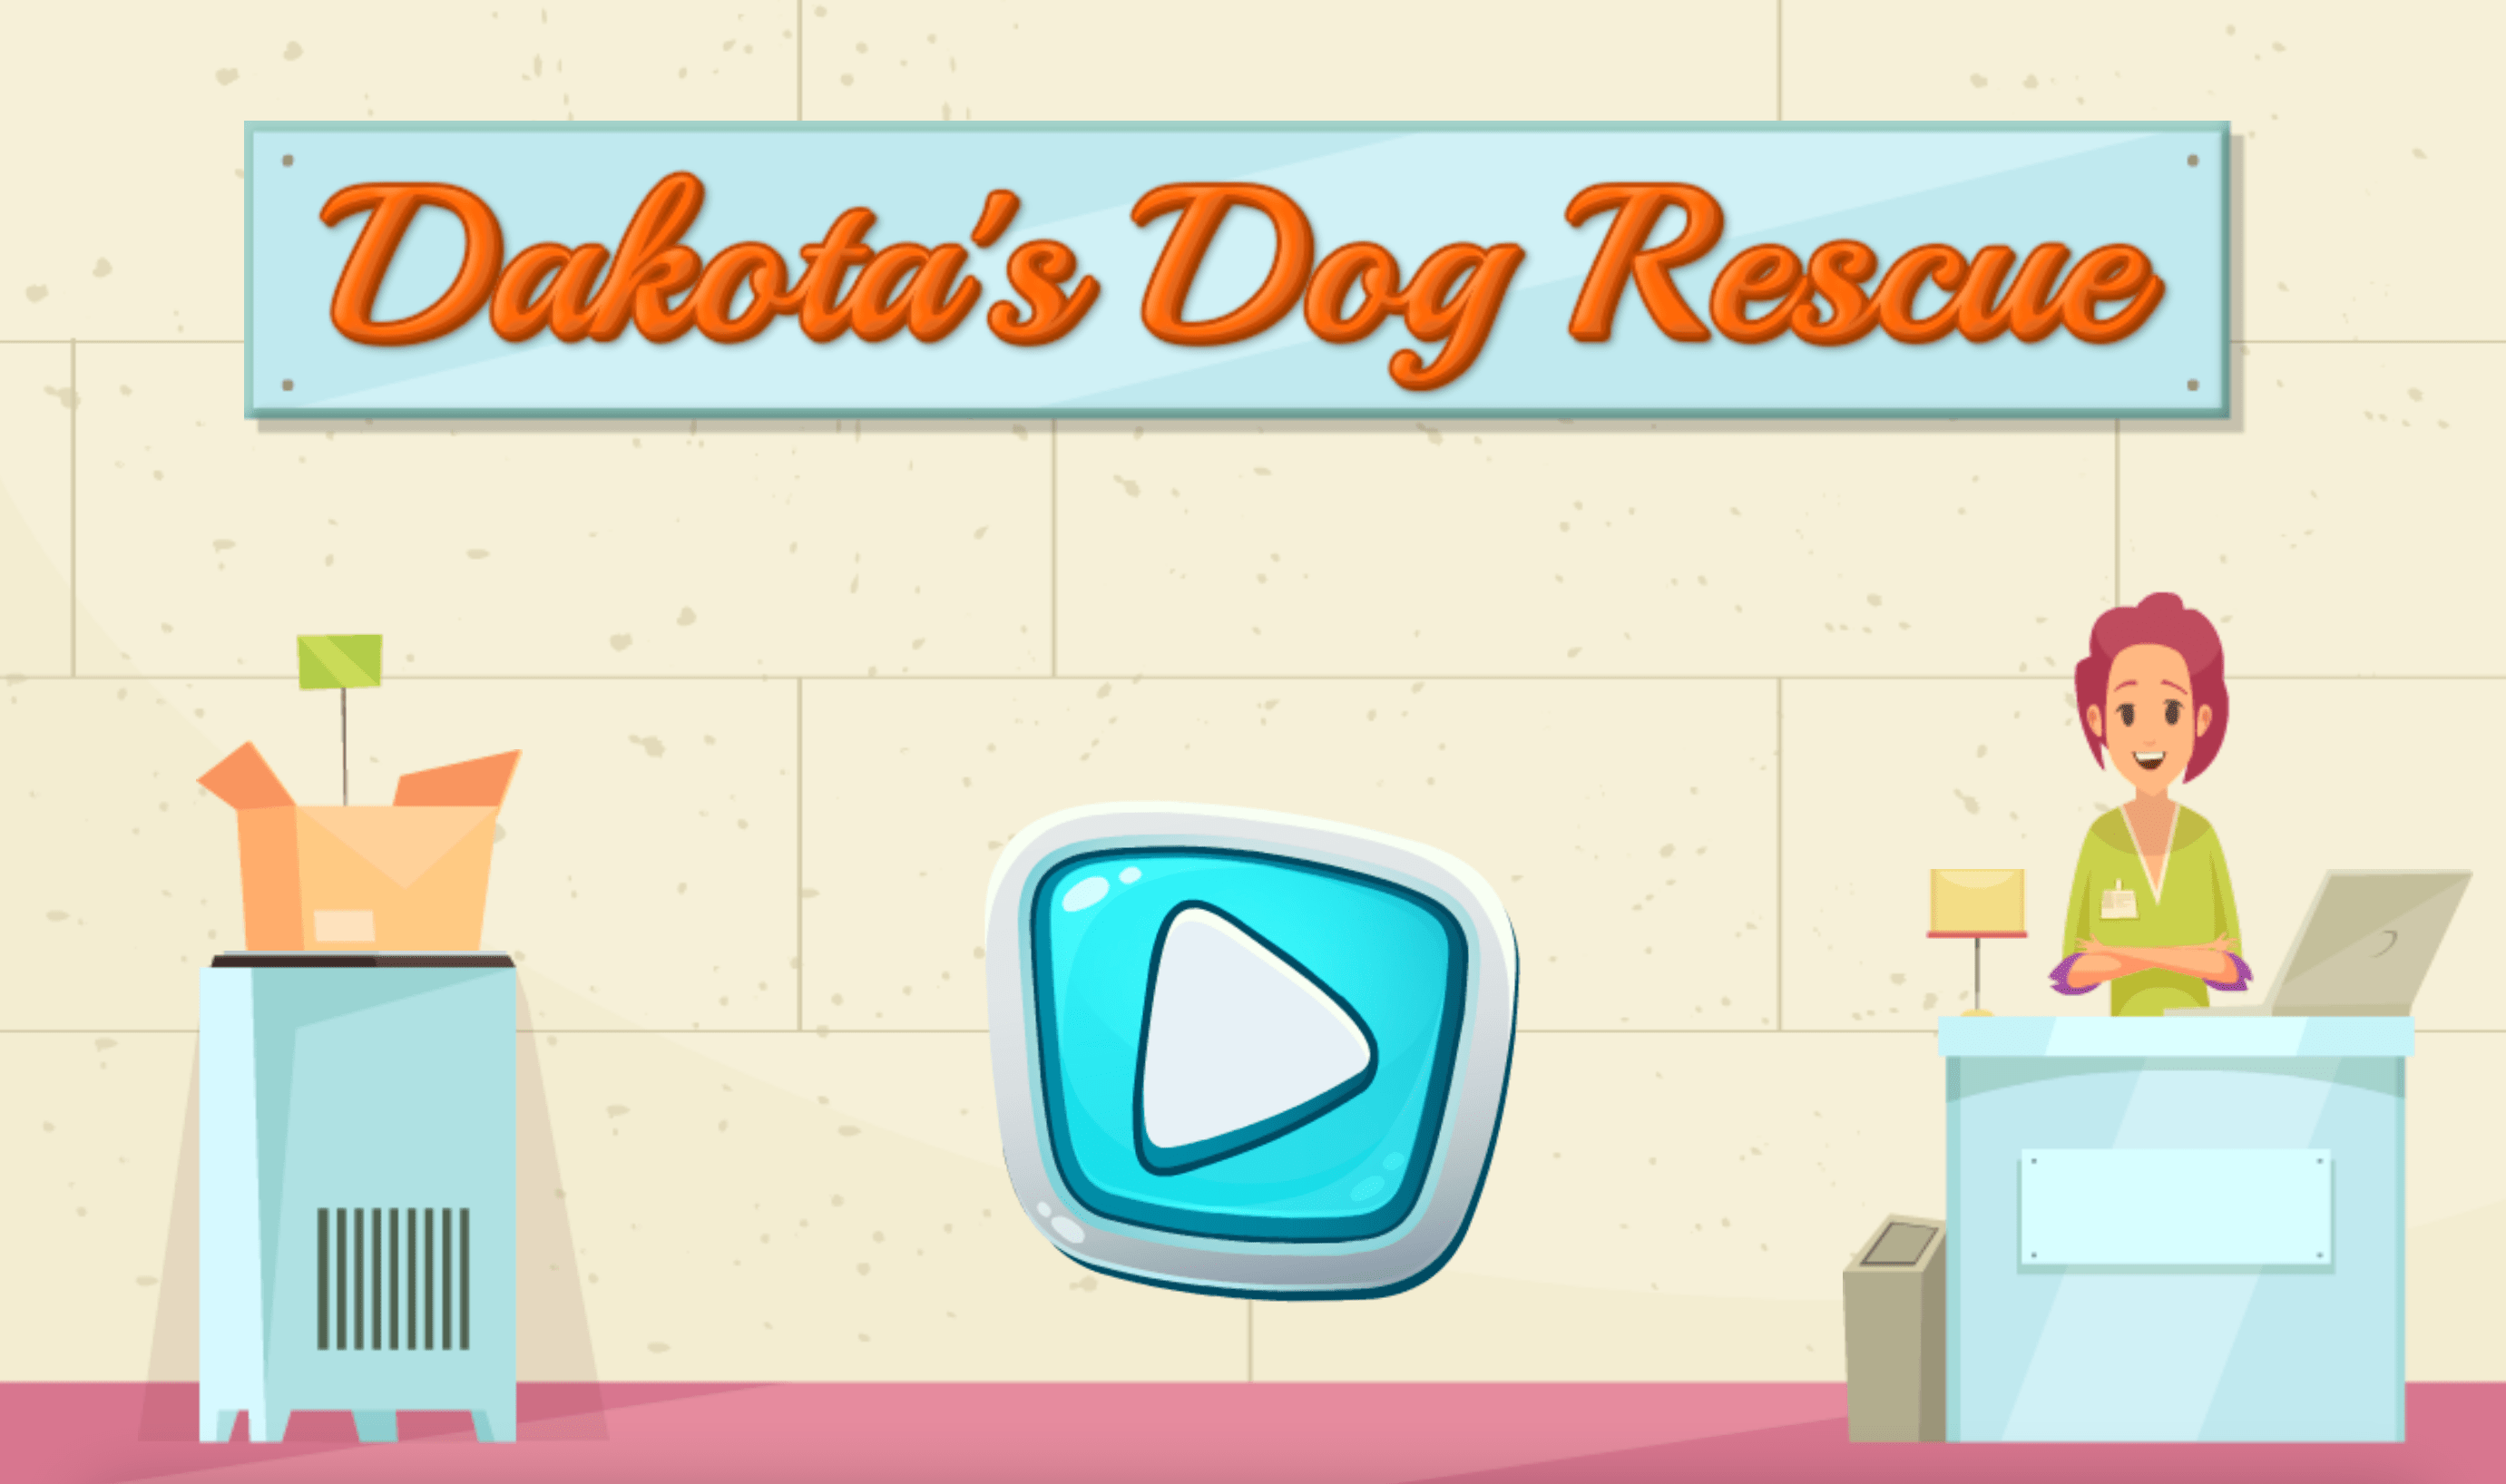 Dakotas Dog Rescue game